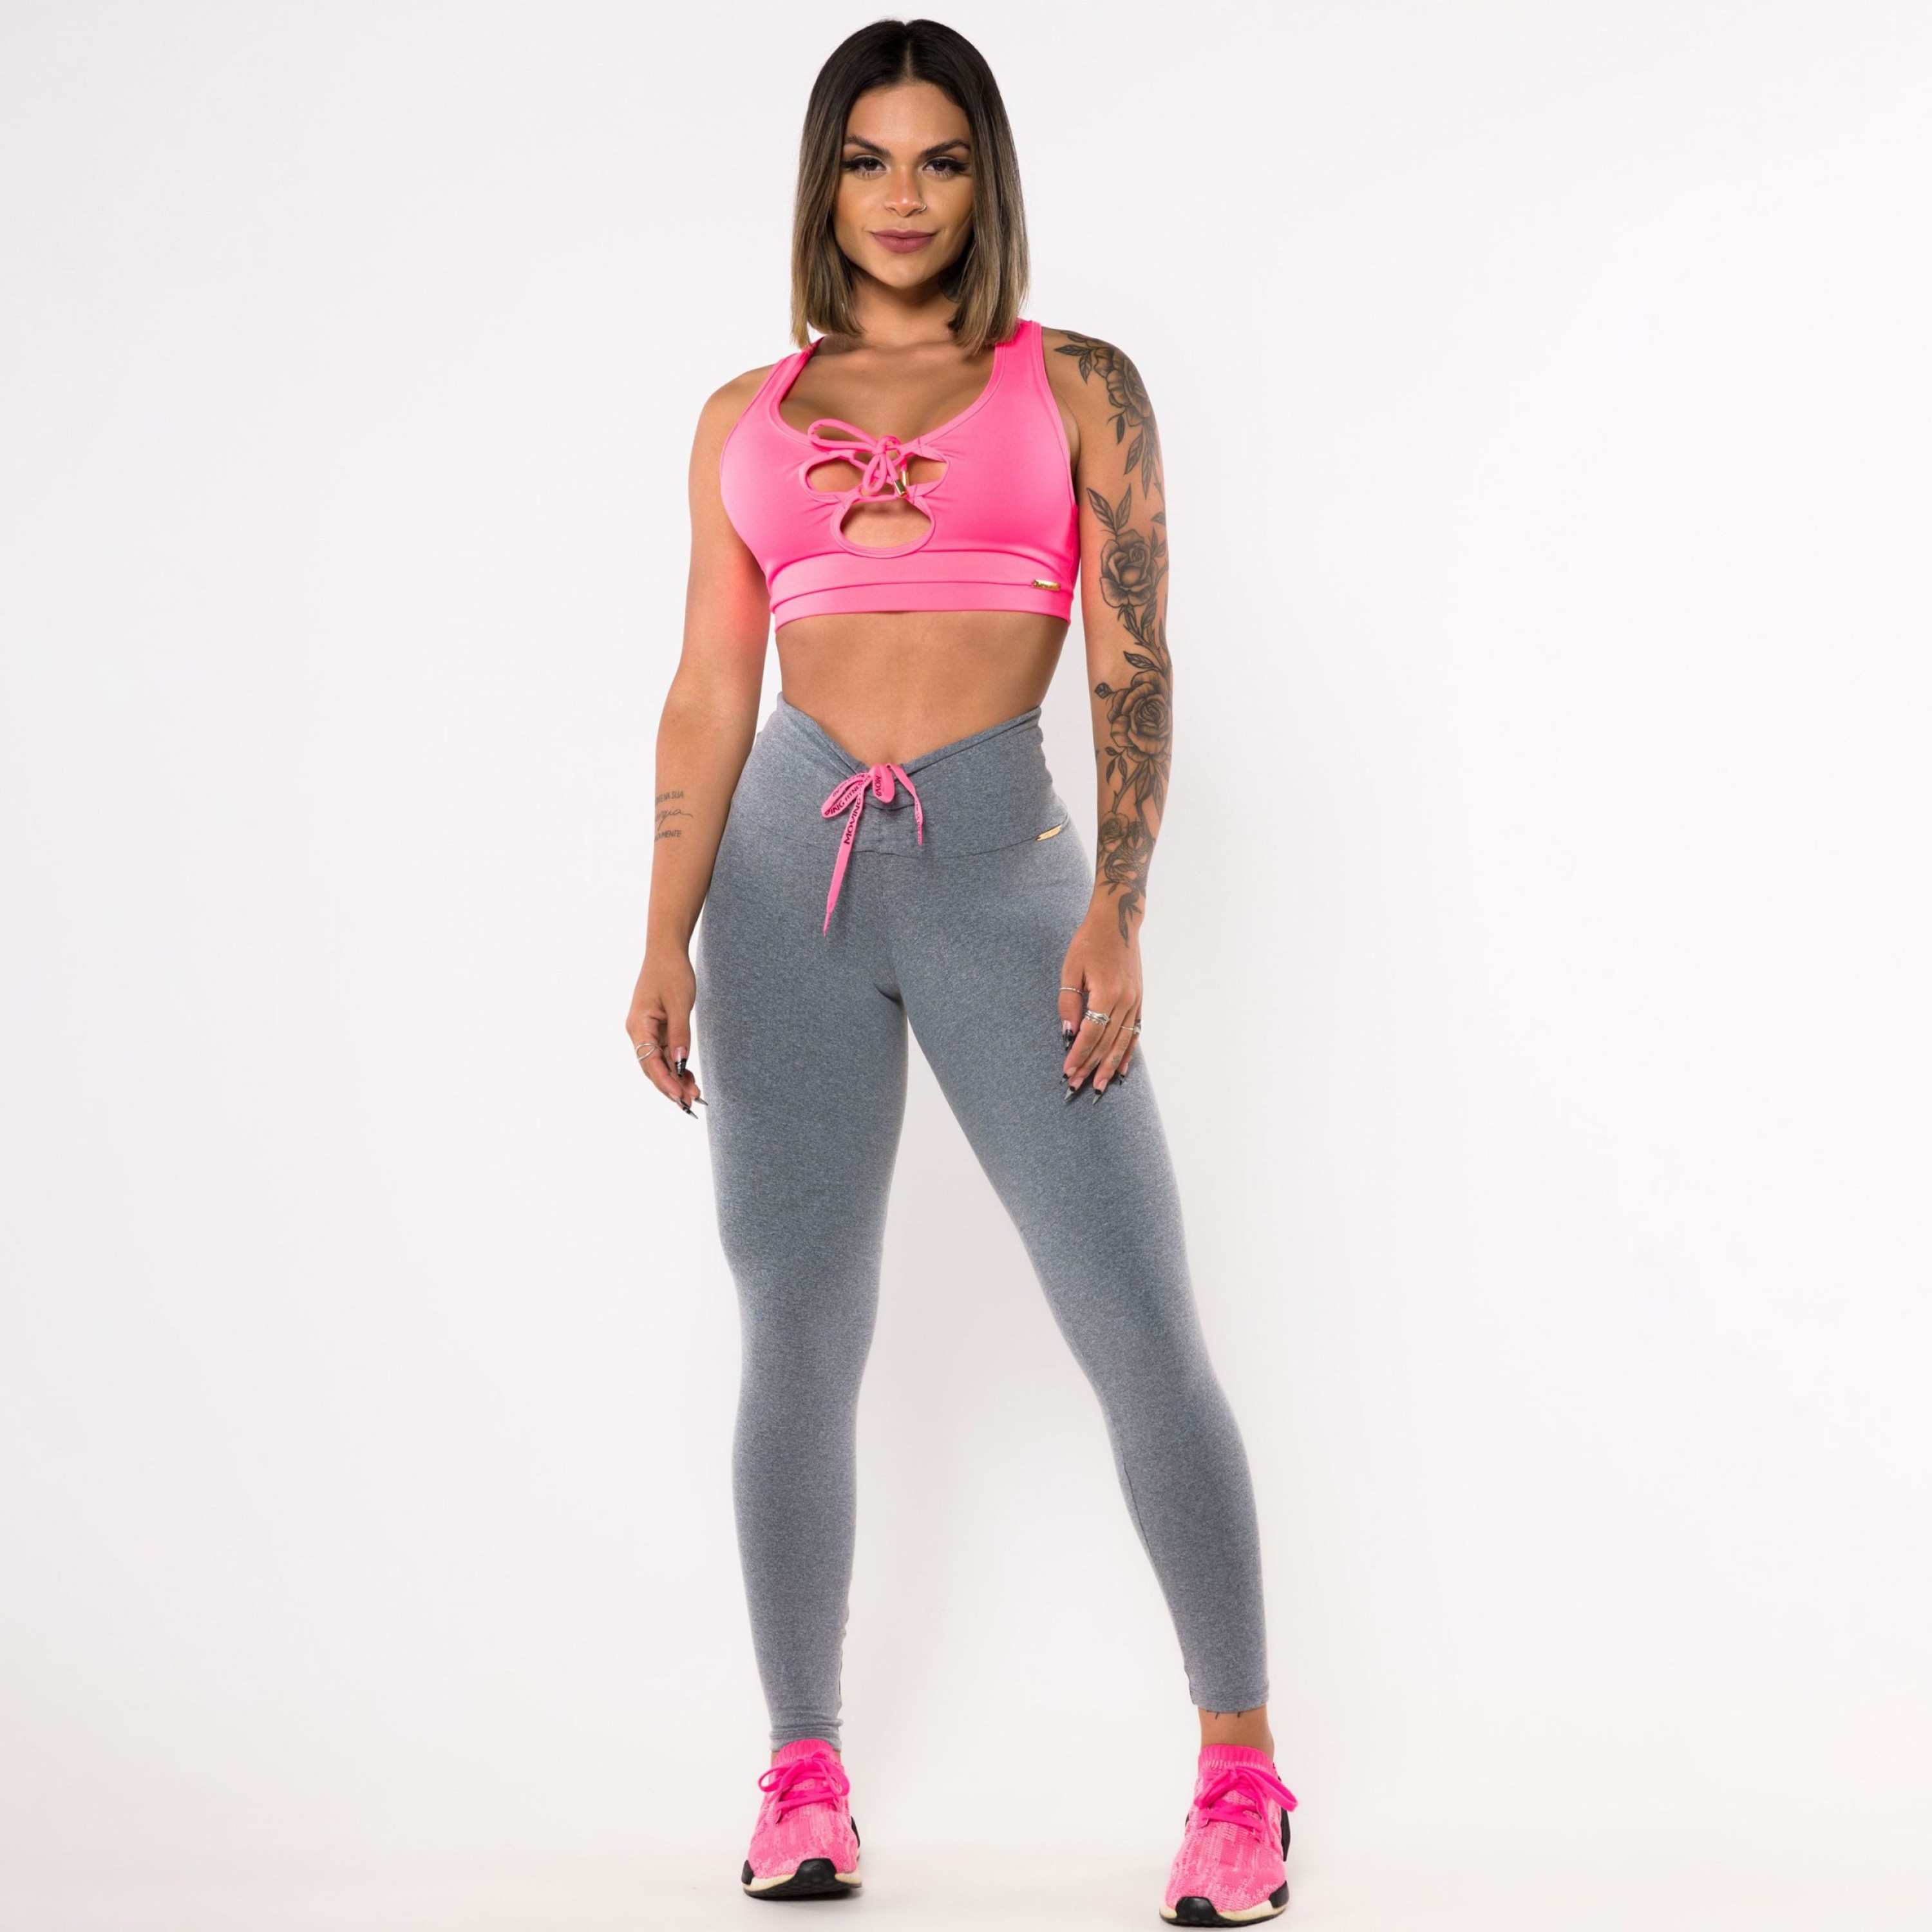 Legging Empina Bumbum Mescla com Cadarço Rosa Neon - Moving Fitness Wear